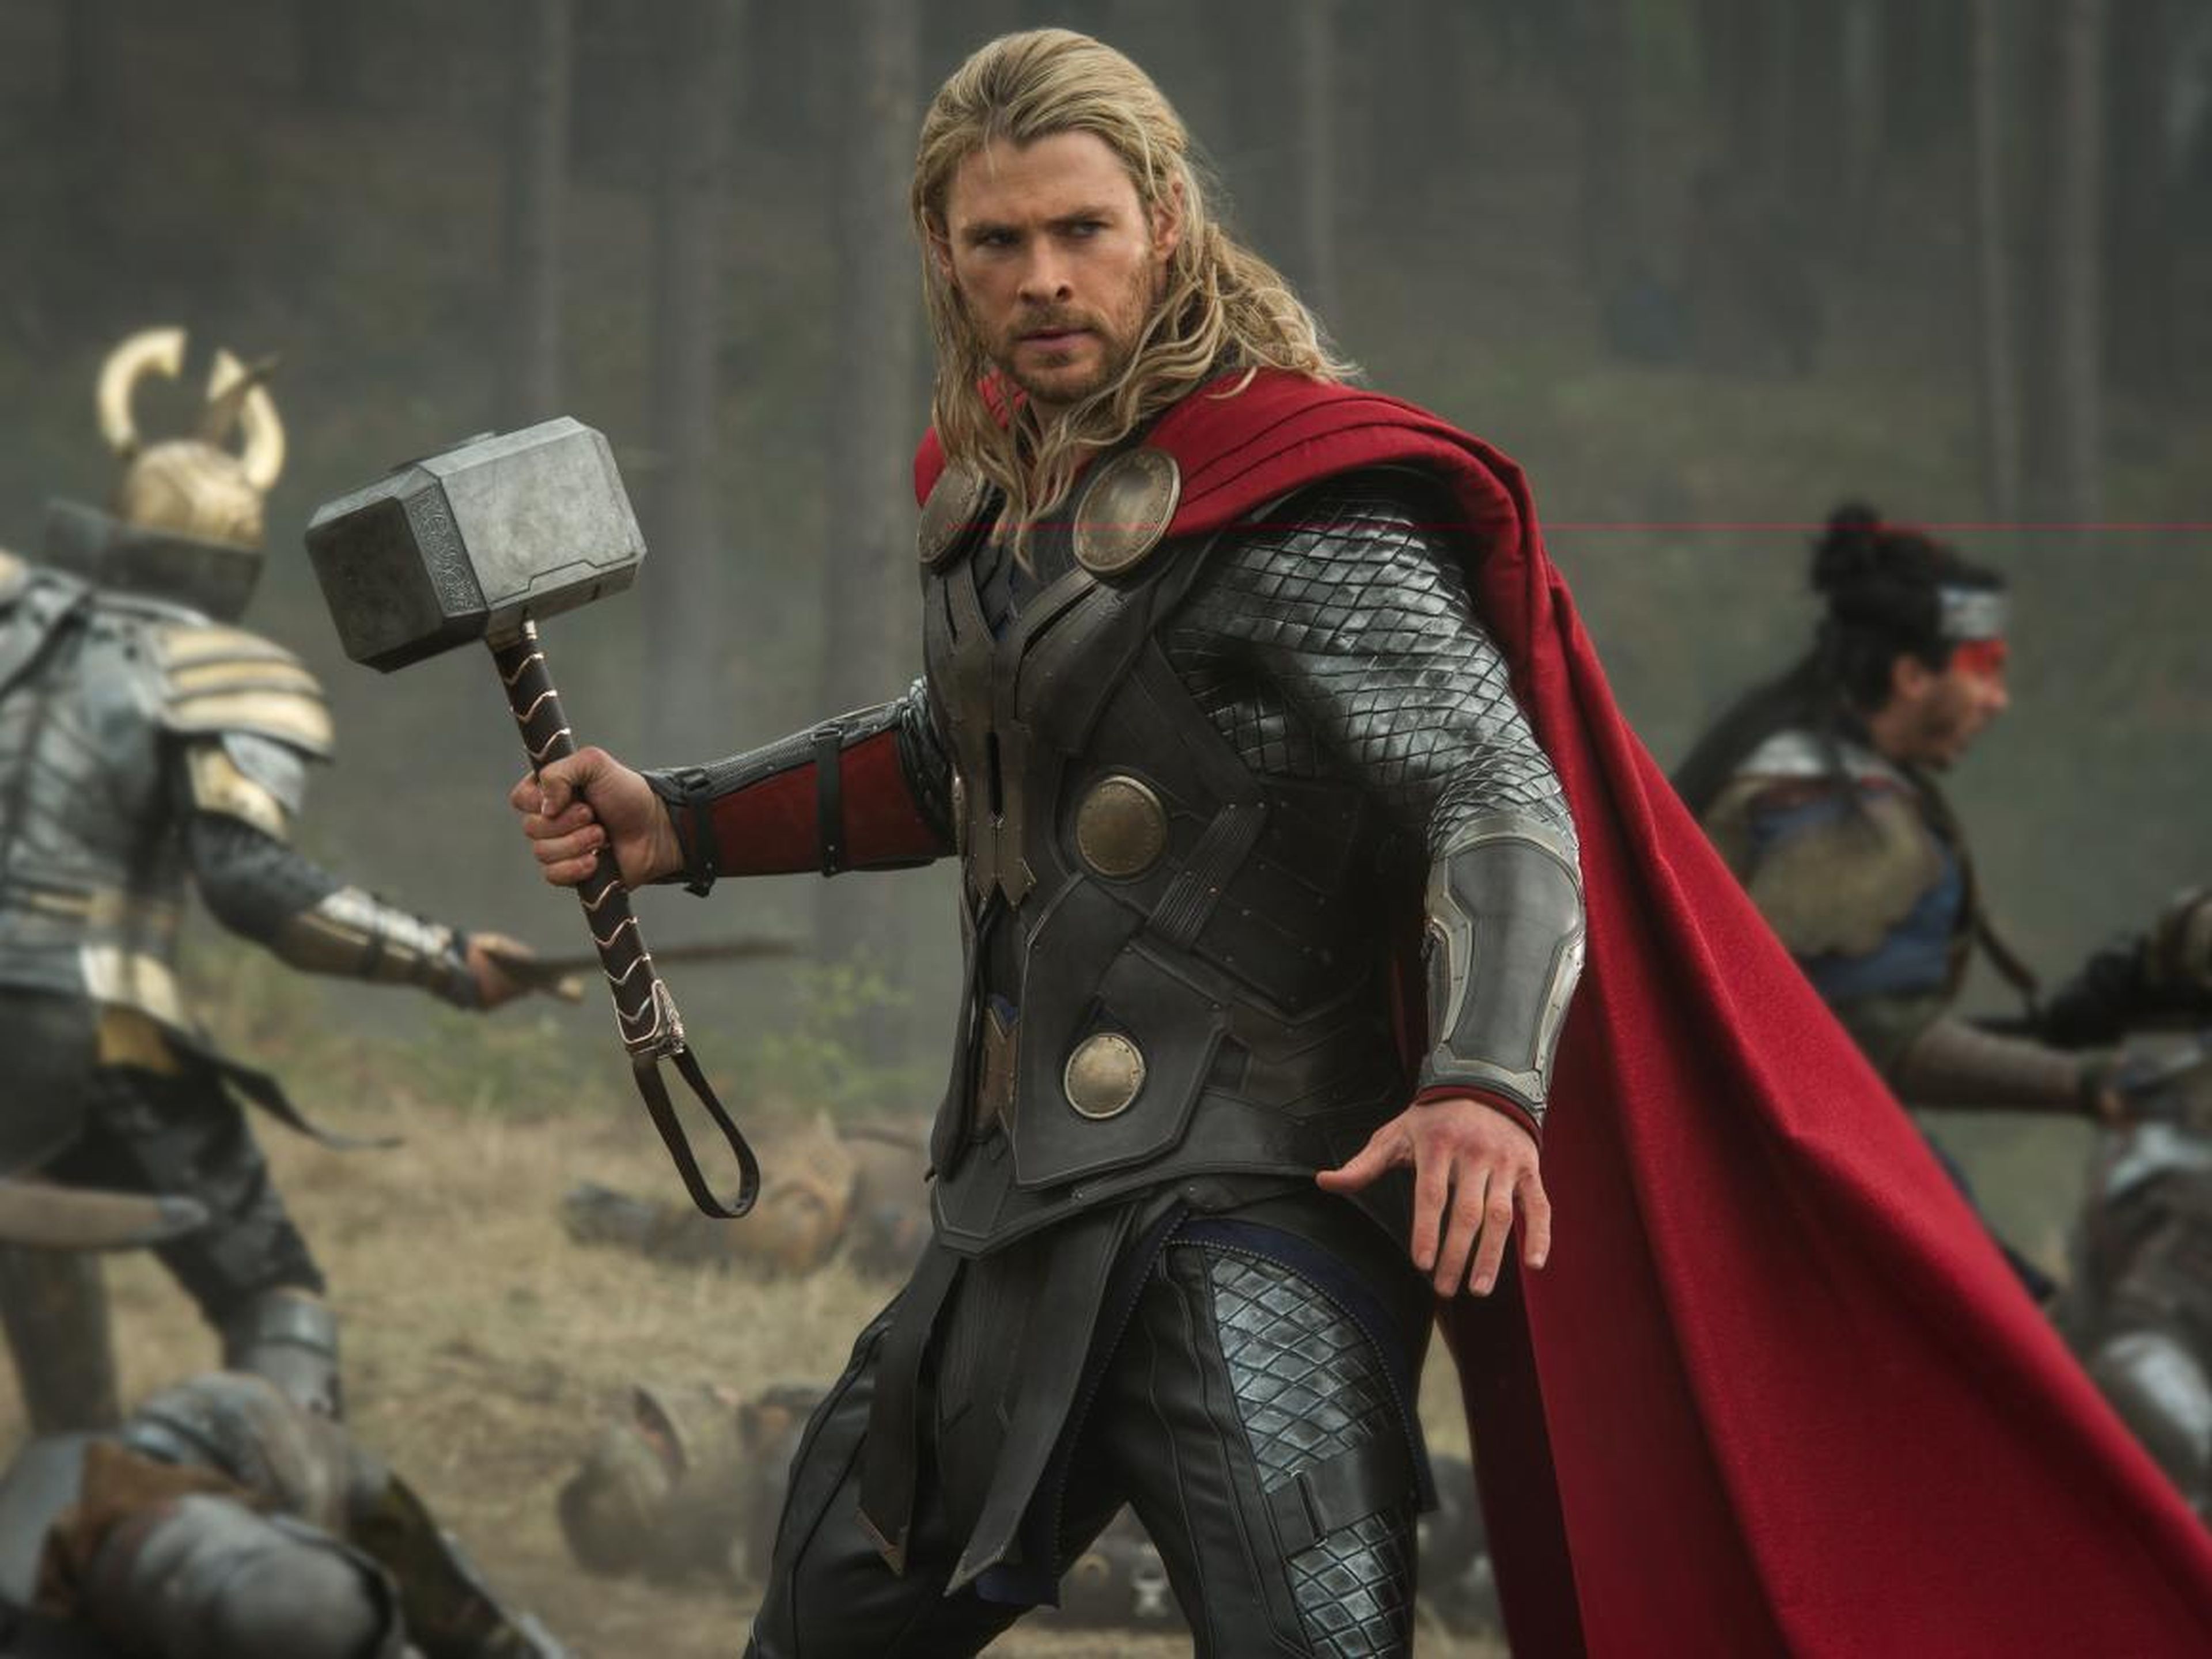 20. "Thor: The Dark World" (2013)